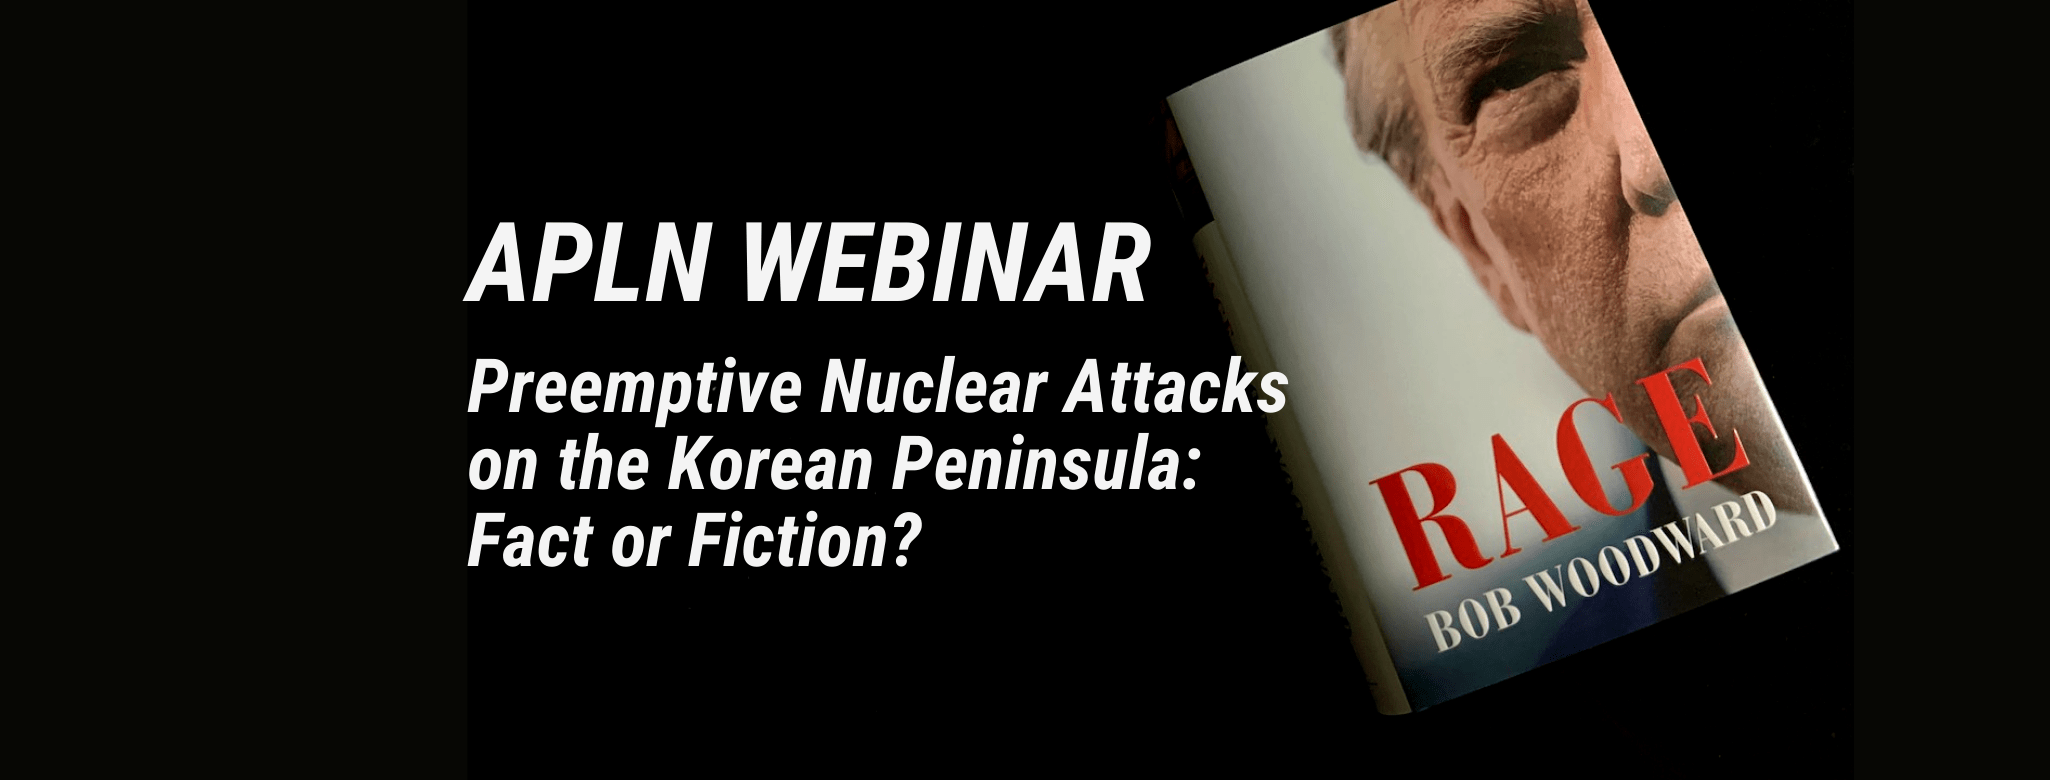 [Online Webinar] Preemptive Nuclear Attacks on the Korean Peninsula: Fact or Fiction?